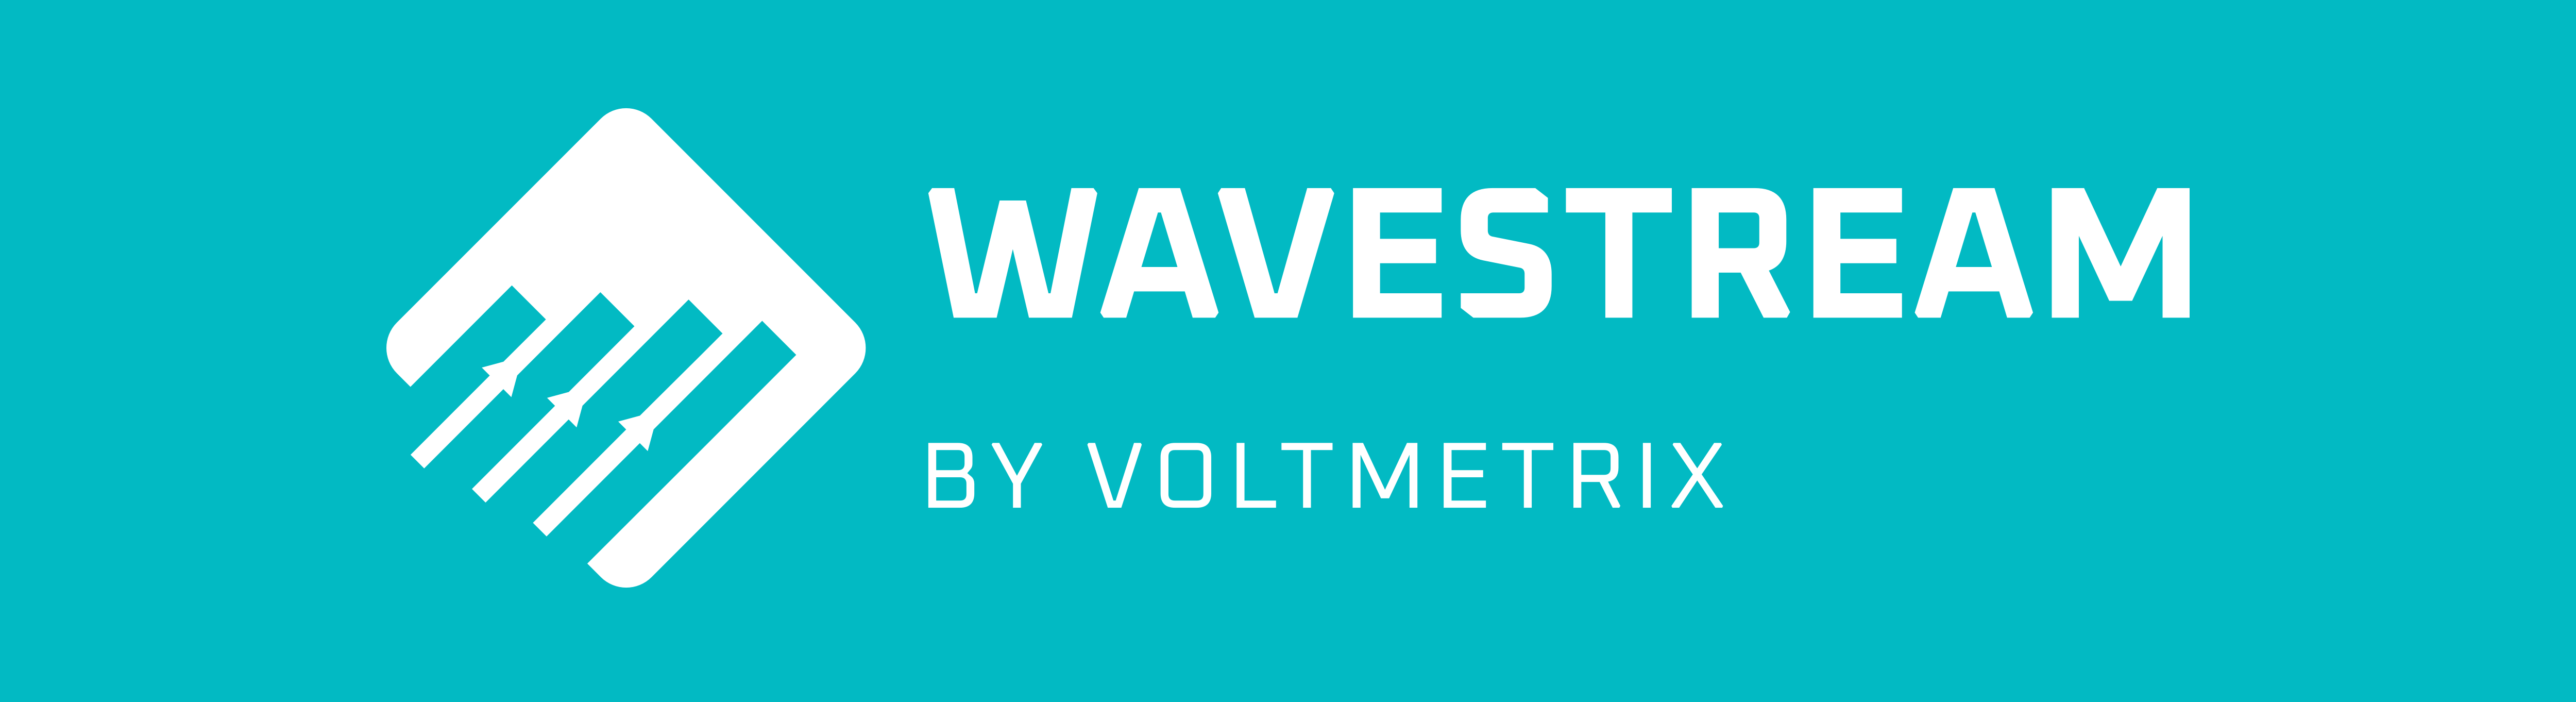 Voltmetrix WaveStream